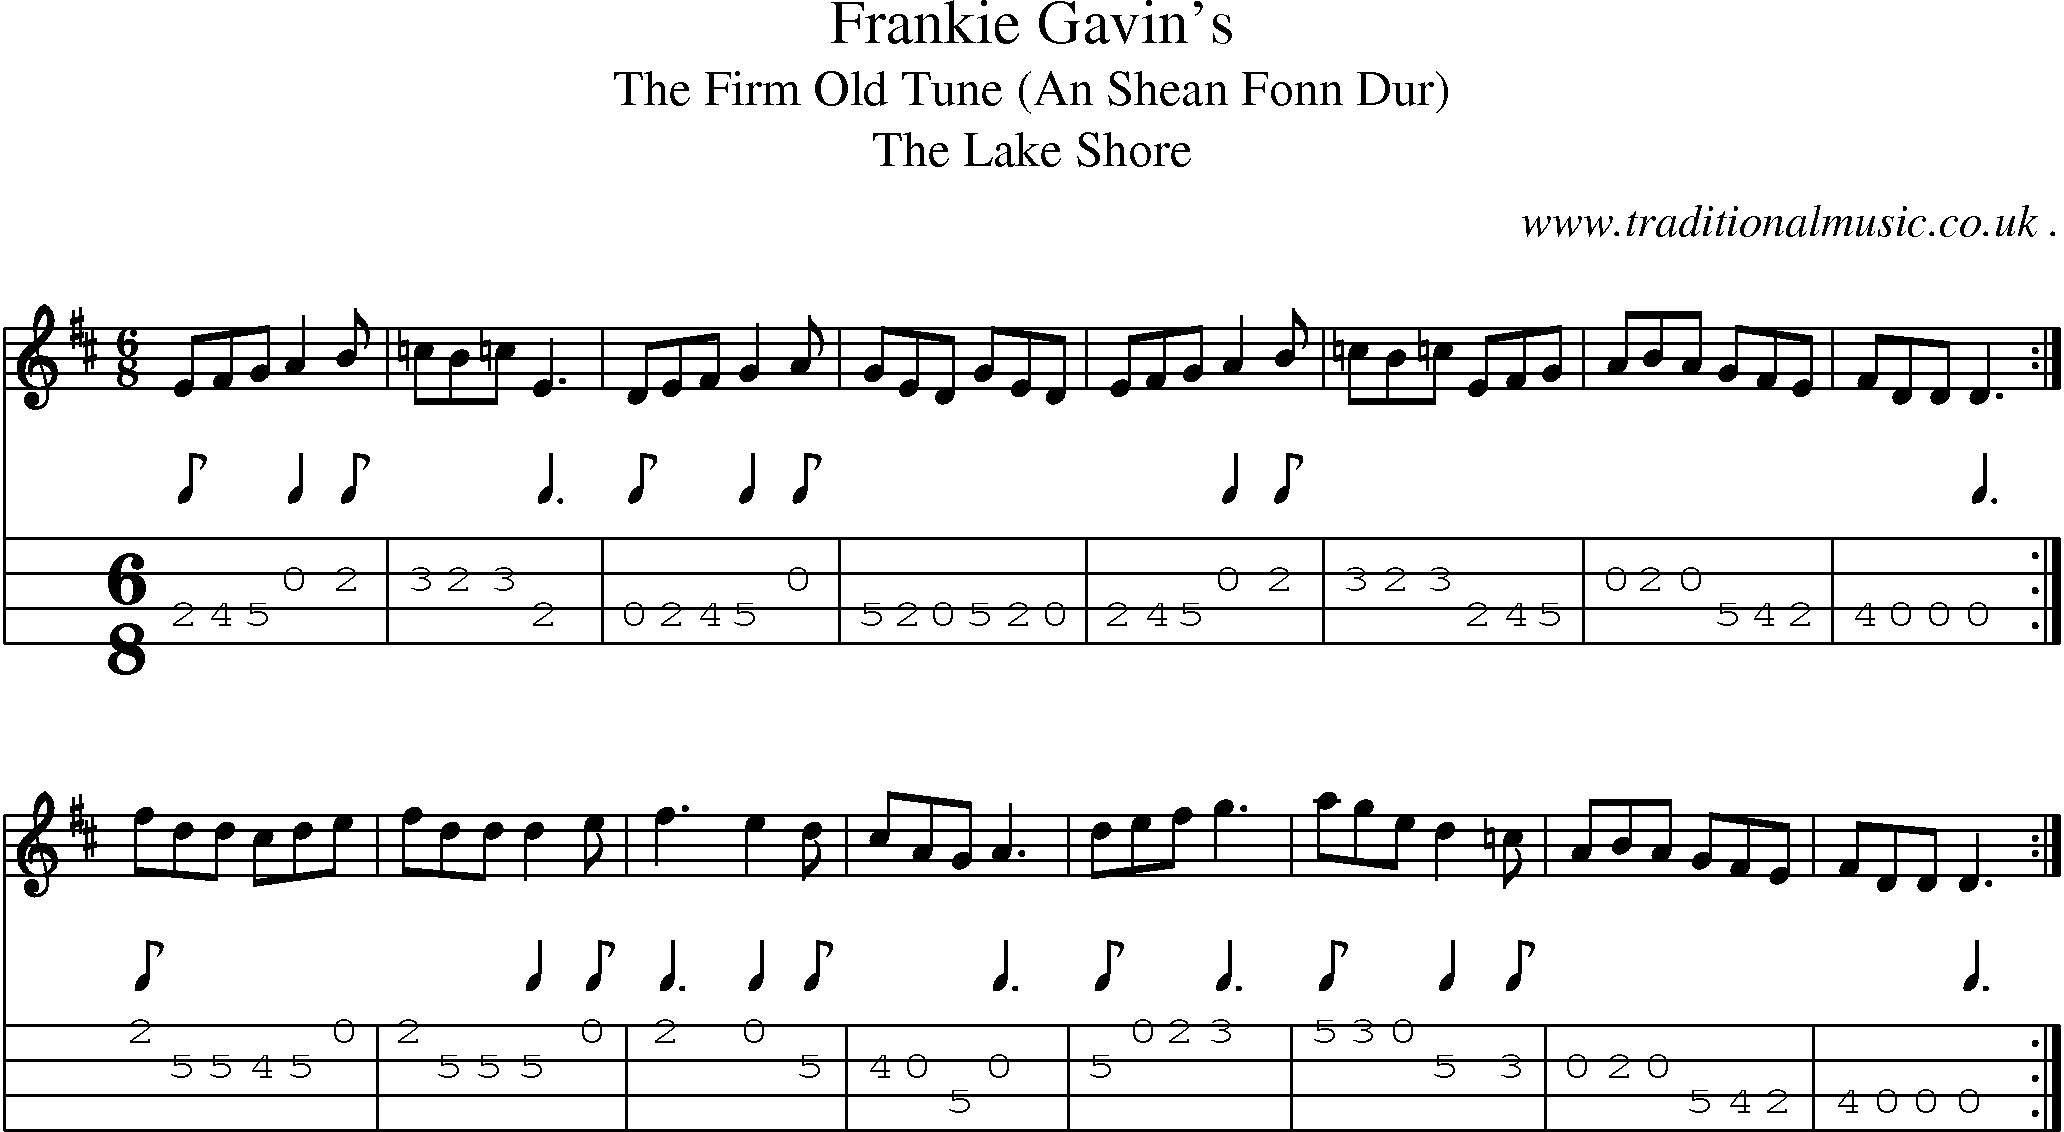 Sheet-Music and Mandolin Tabs for Frankie Gavins